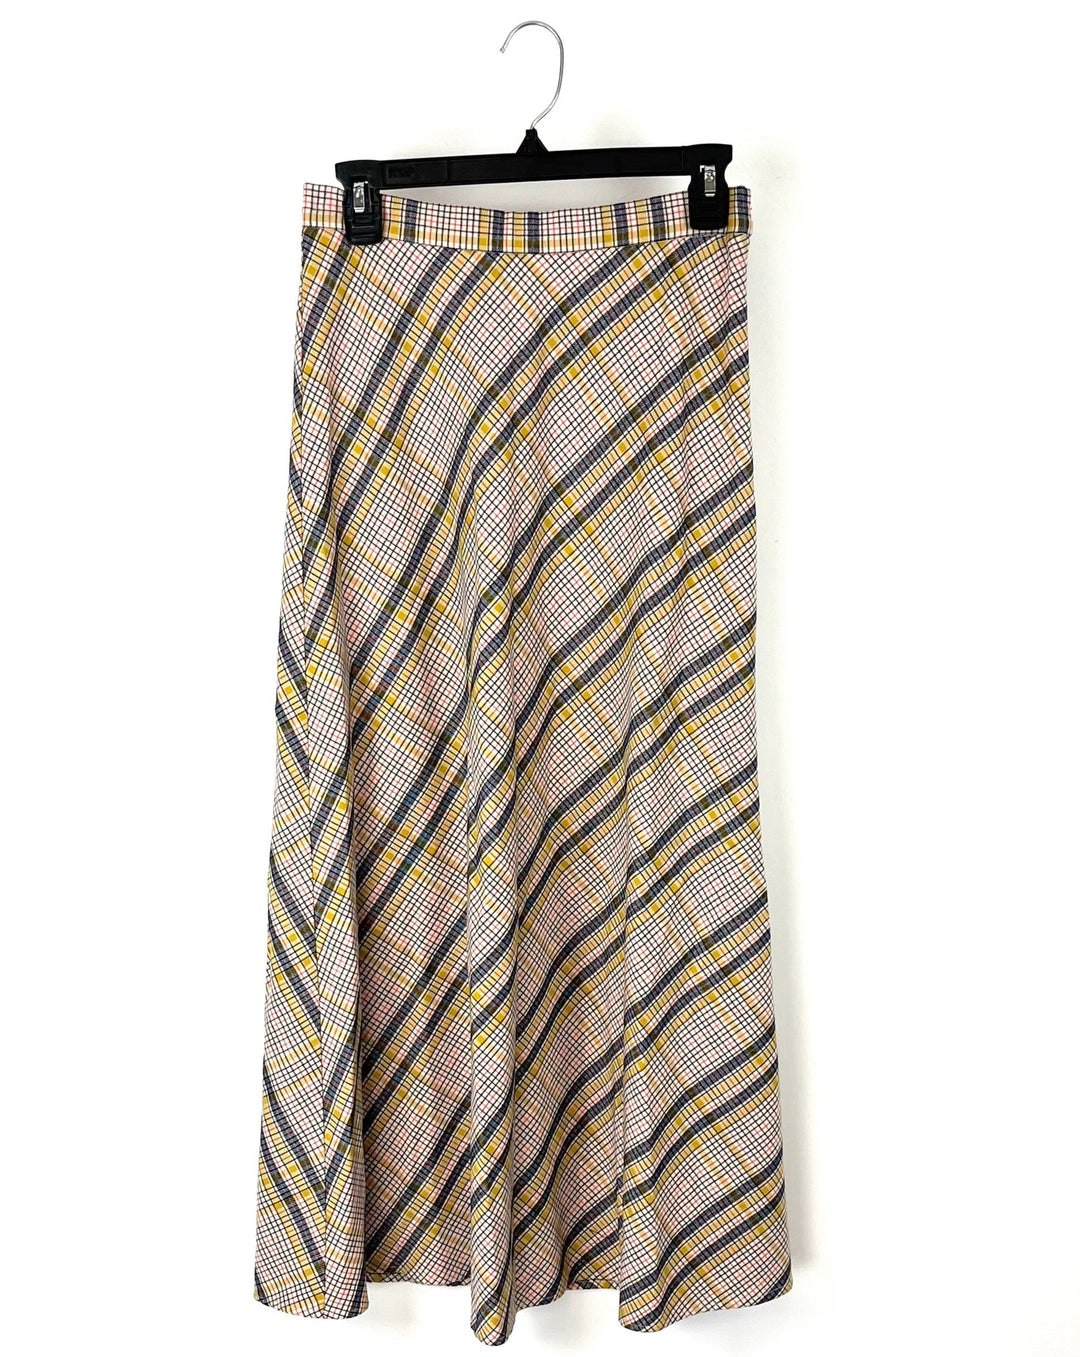 Plaid Maxi Skirt - Size 4-6